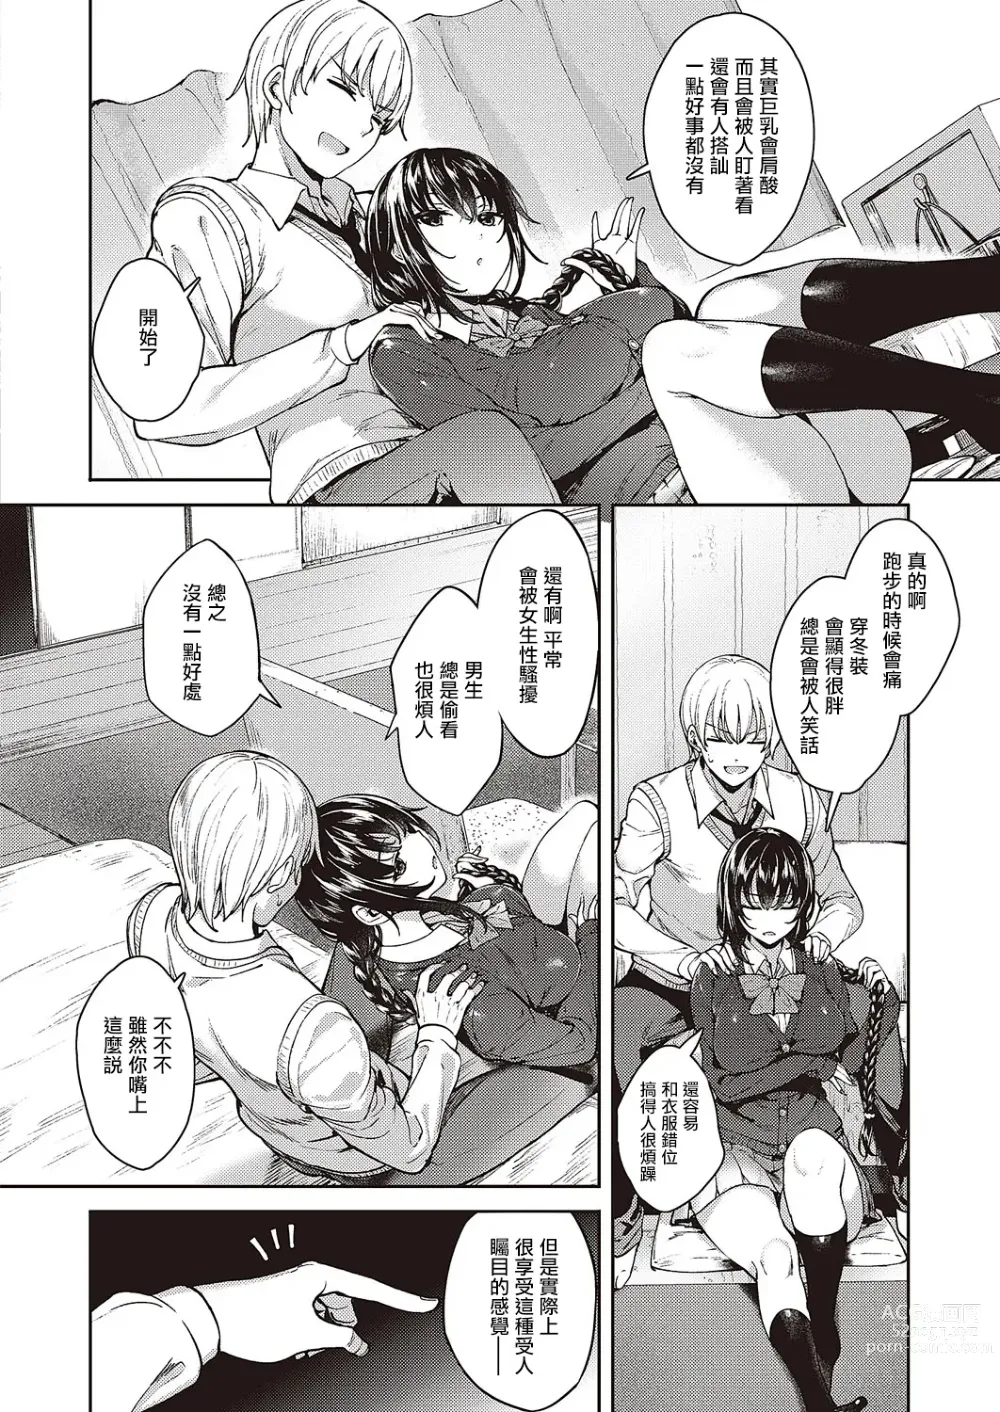 Page 6 of manga めぐりどころ 1歩